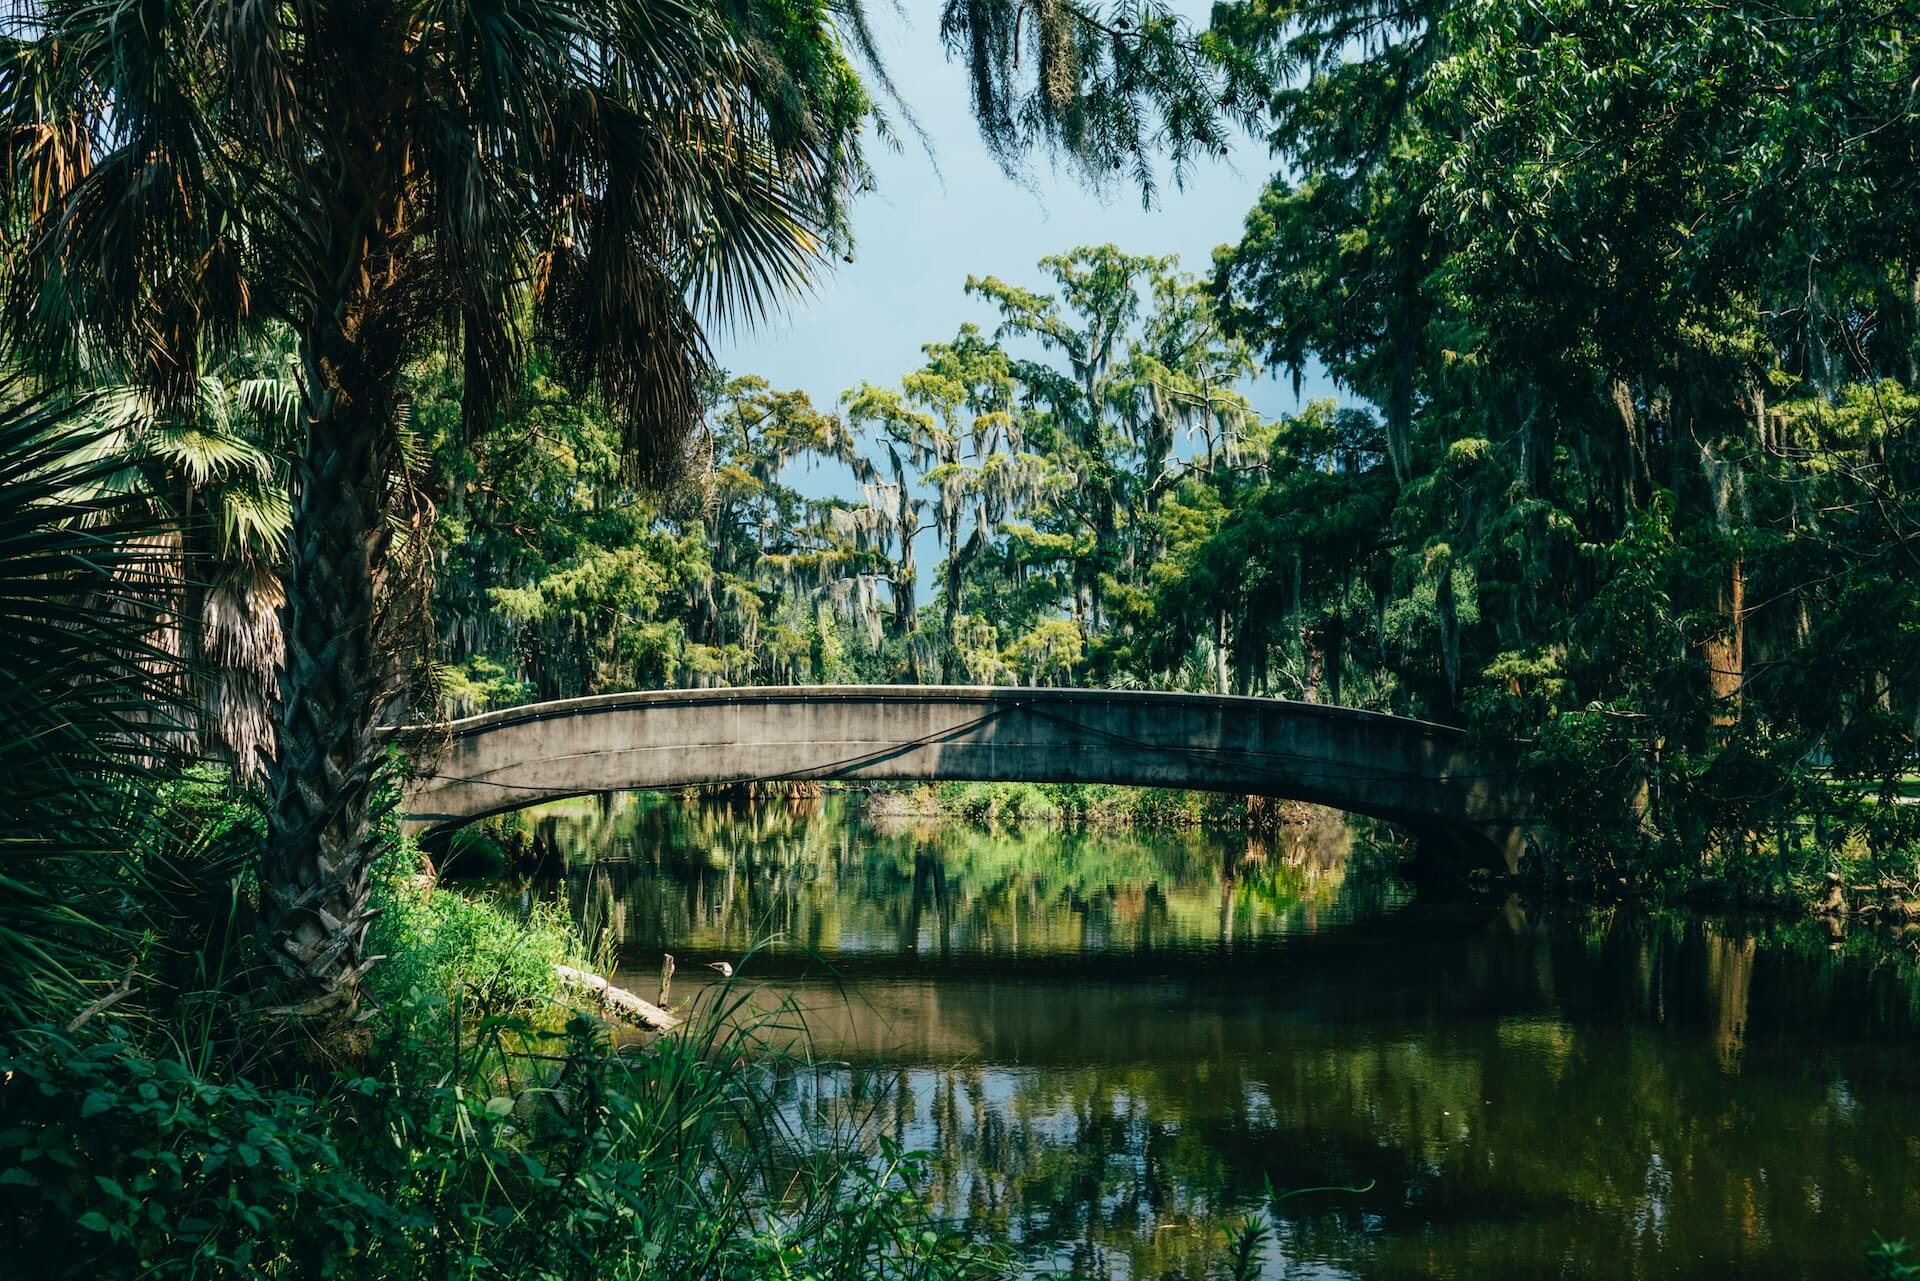 Bridge in City Park in New Orleans